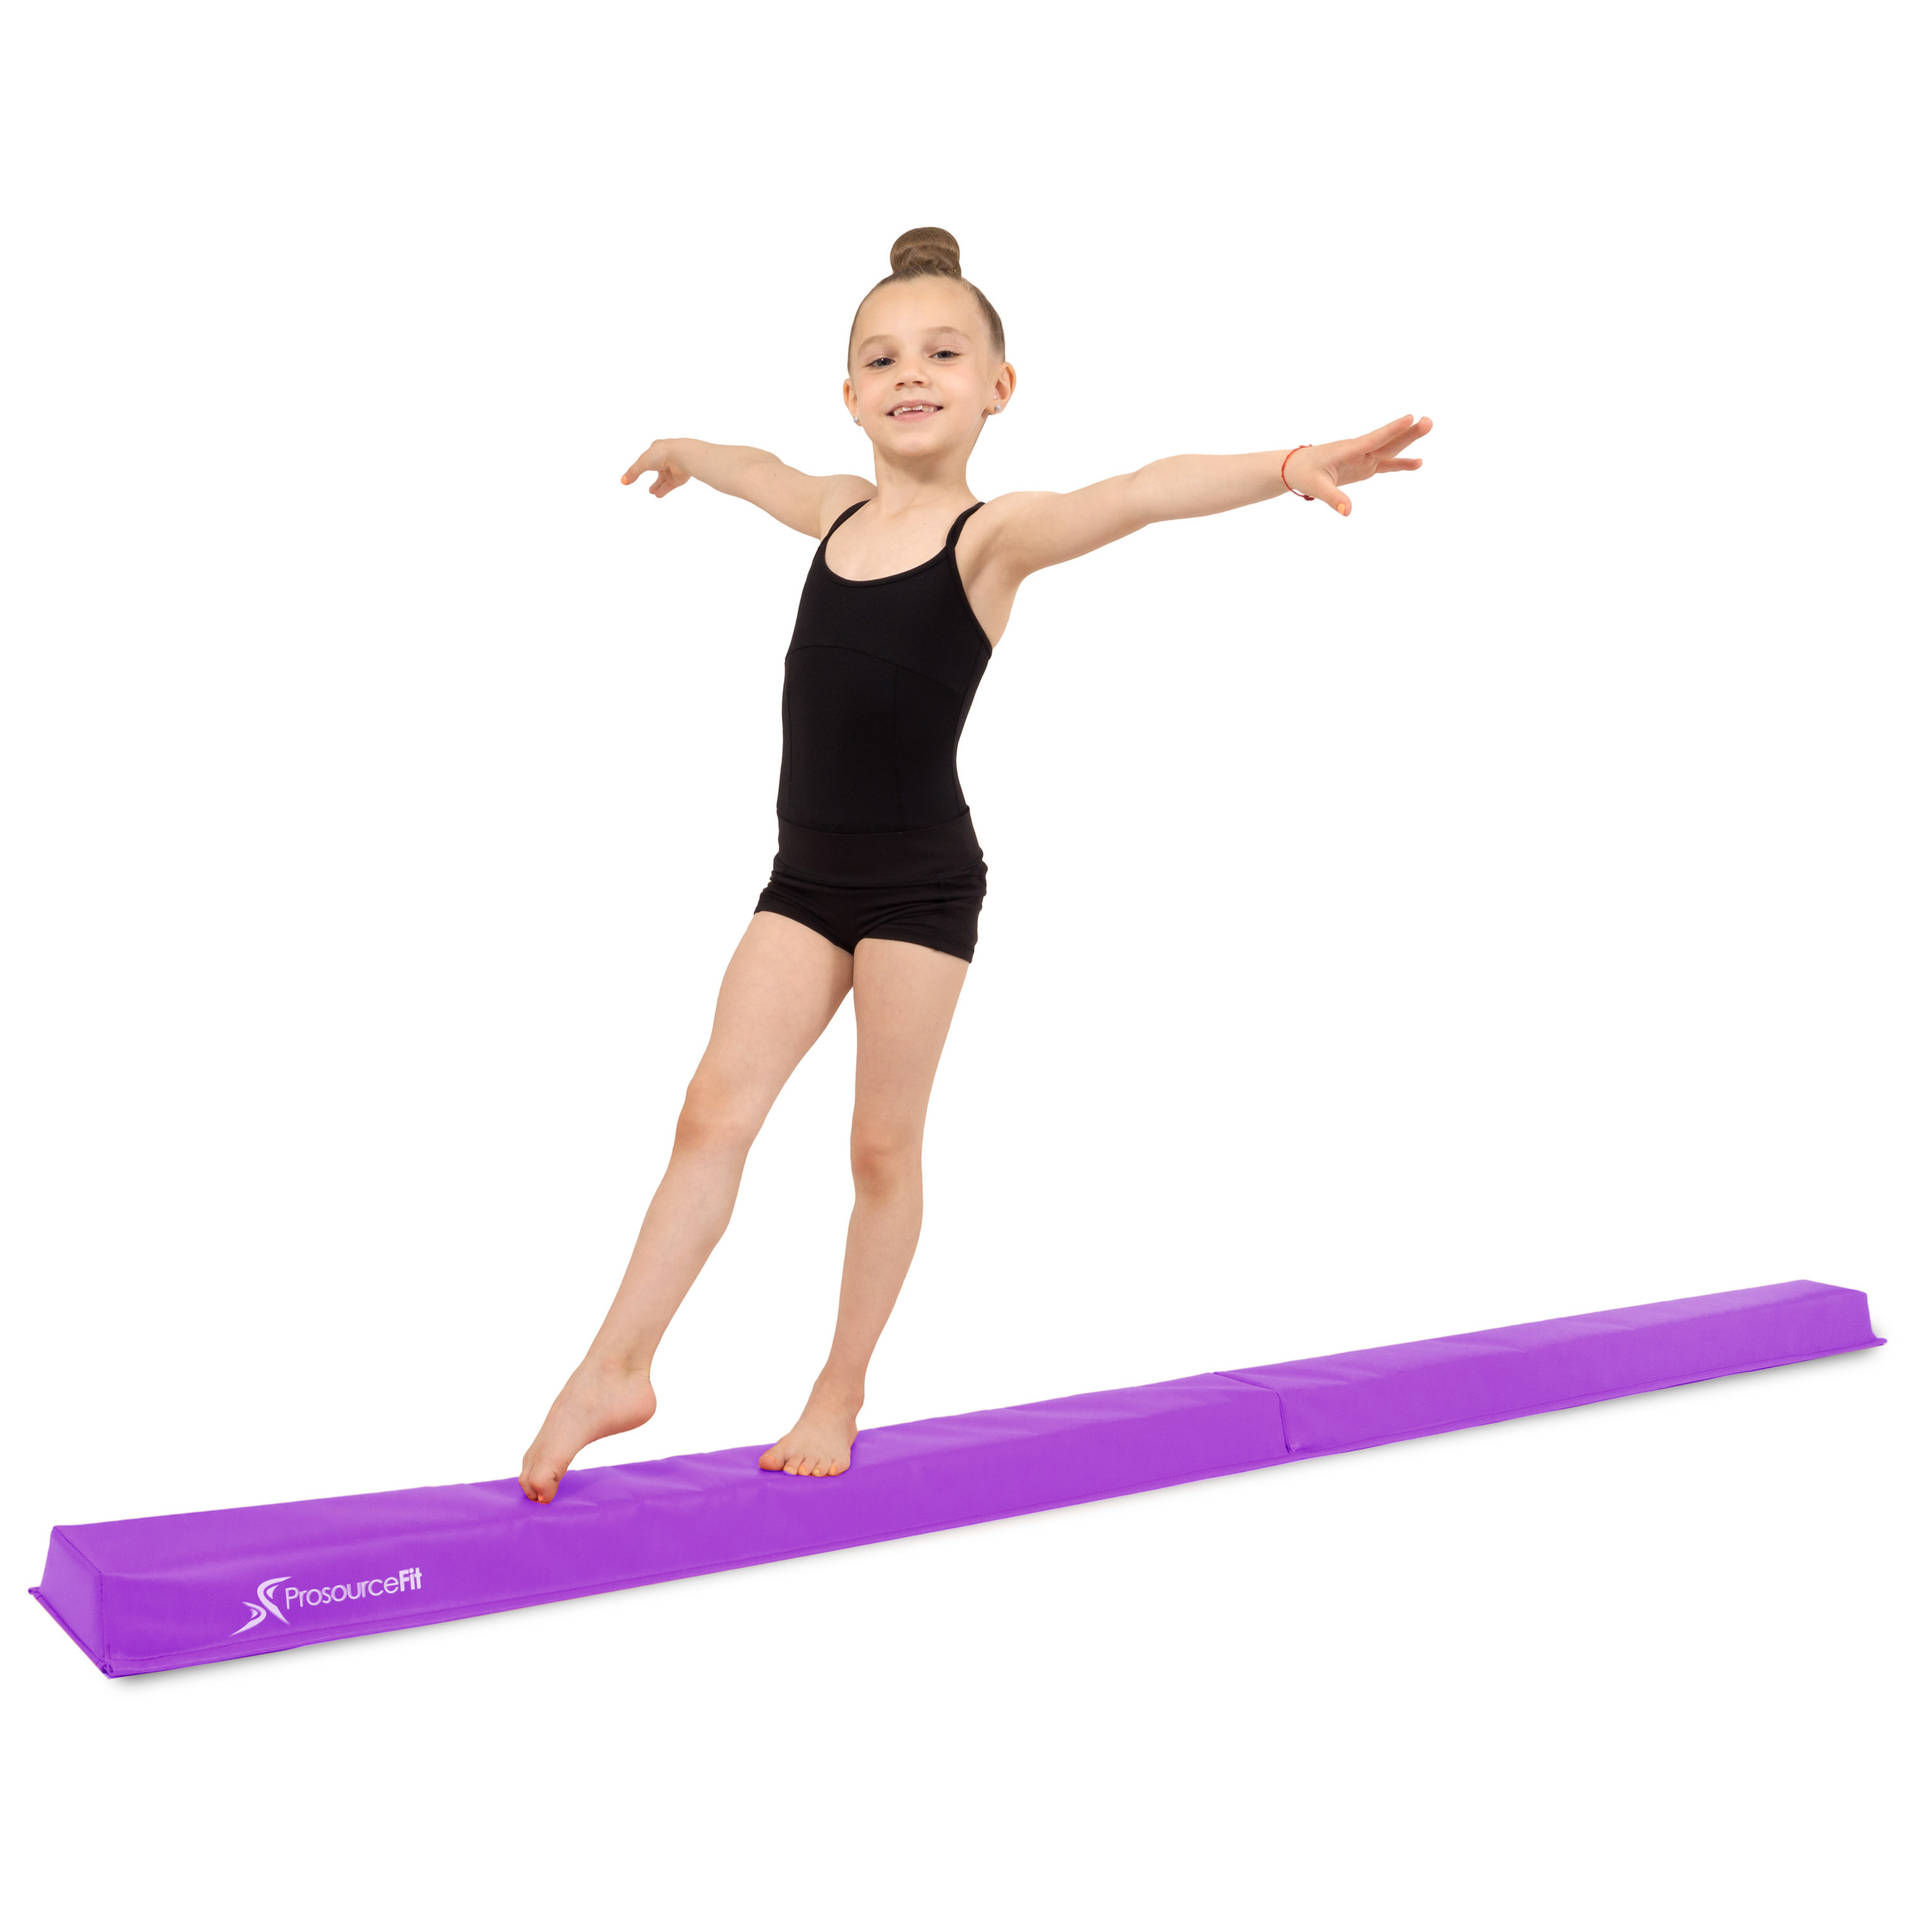 Prosourcefit Gymnastics Balance Beam Wallpaper